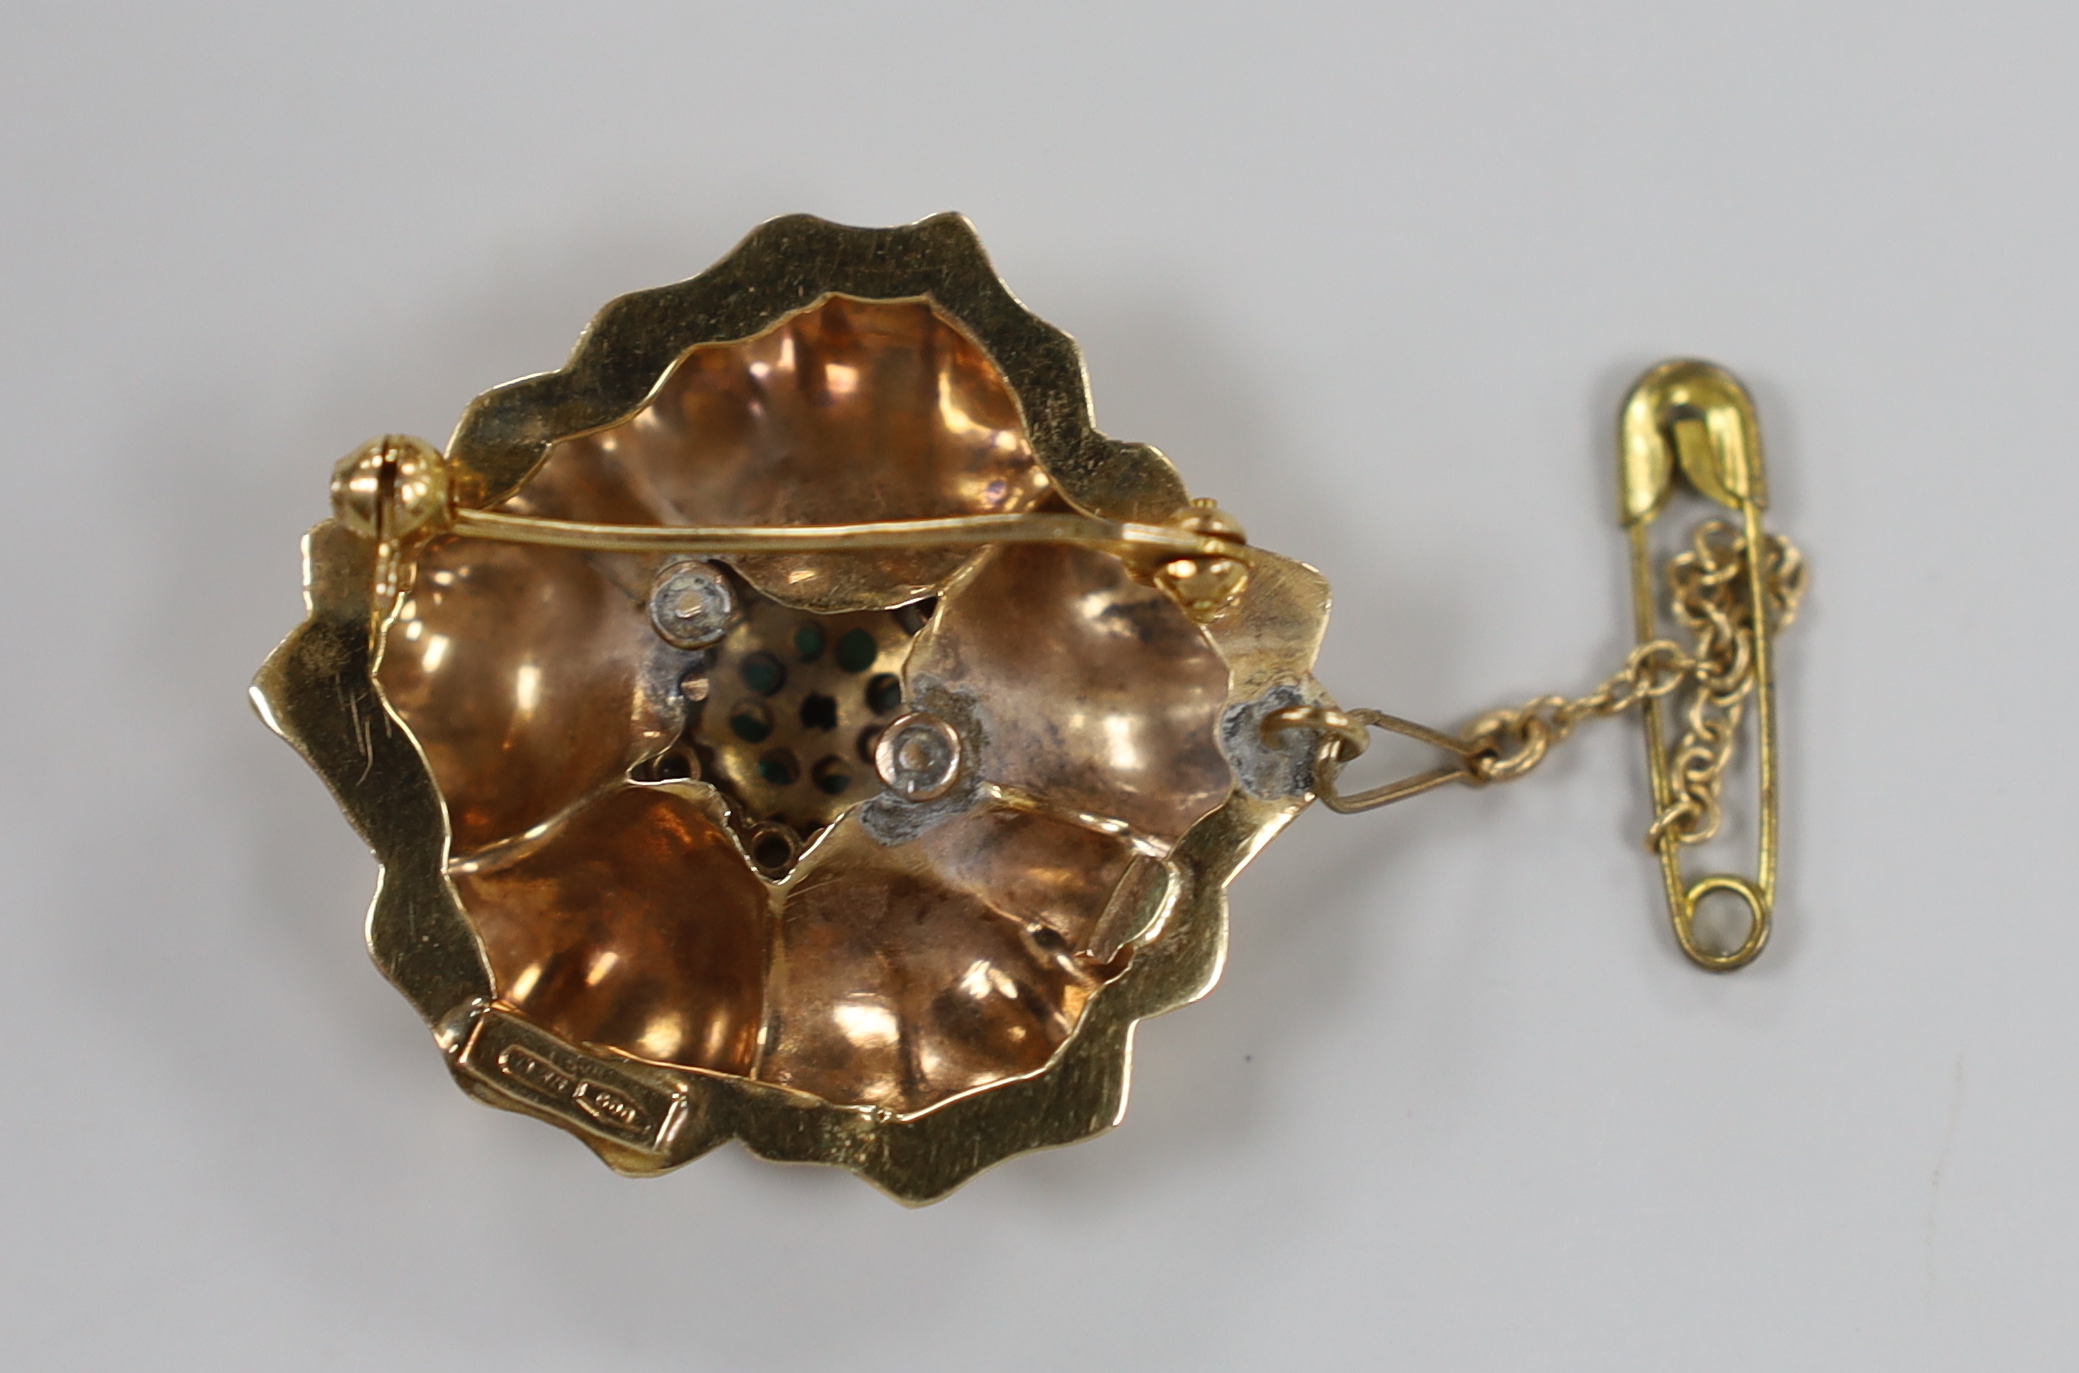 A 20th century Italian 500? standard yellow metal, diamond and emerald set brooch, 33mm, gross 6.5 - Image 2 of 2